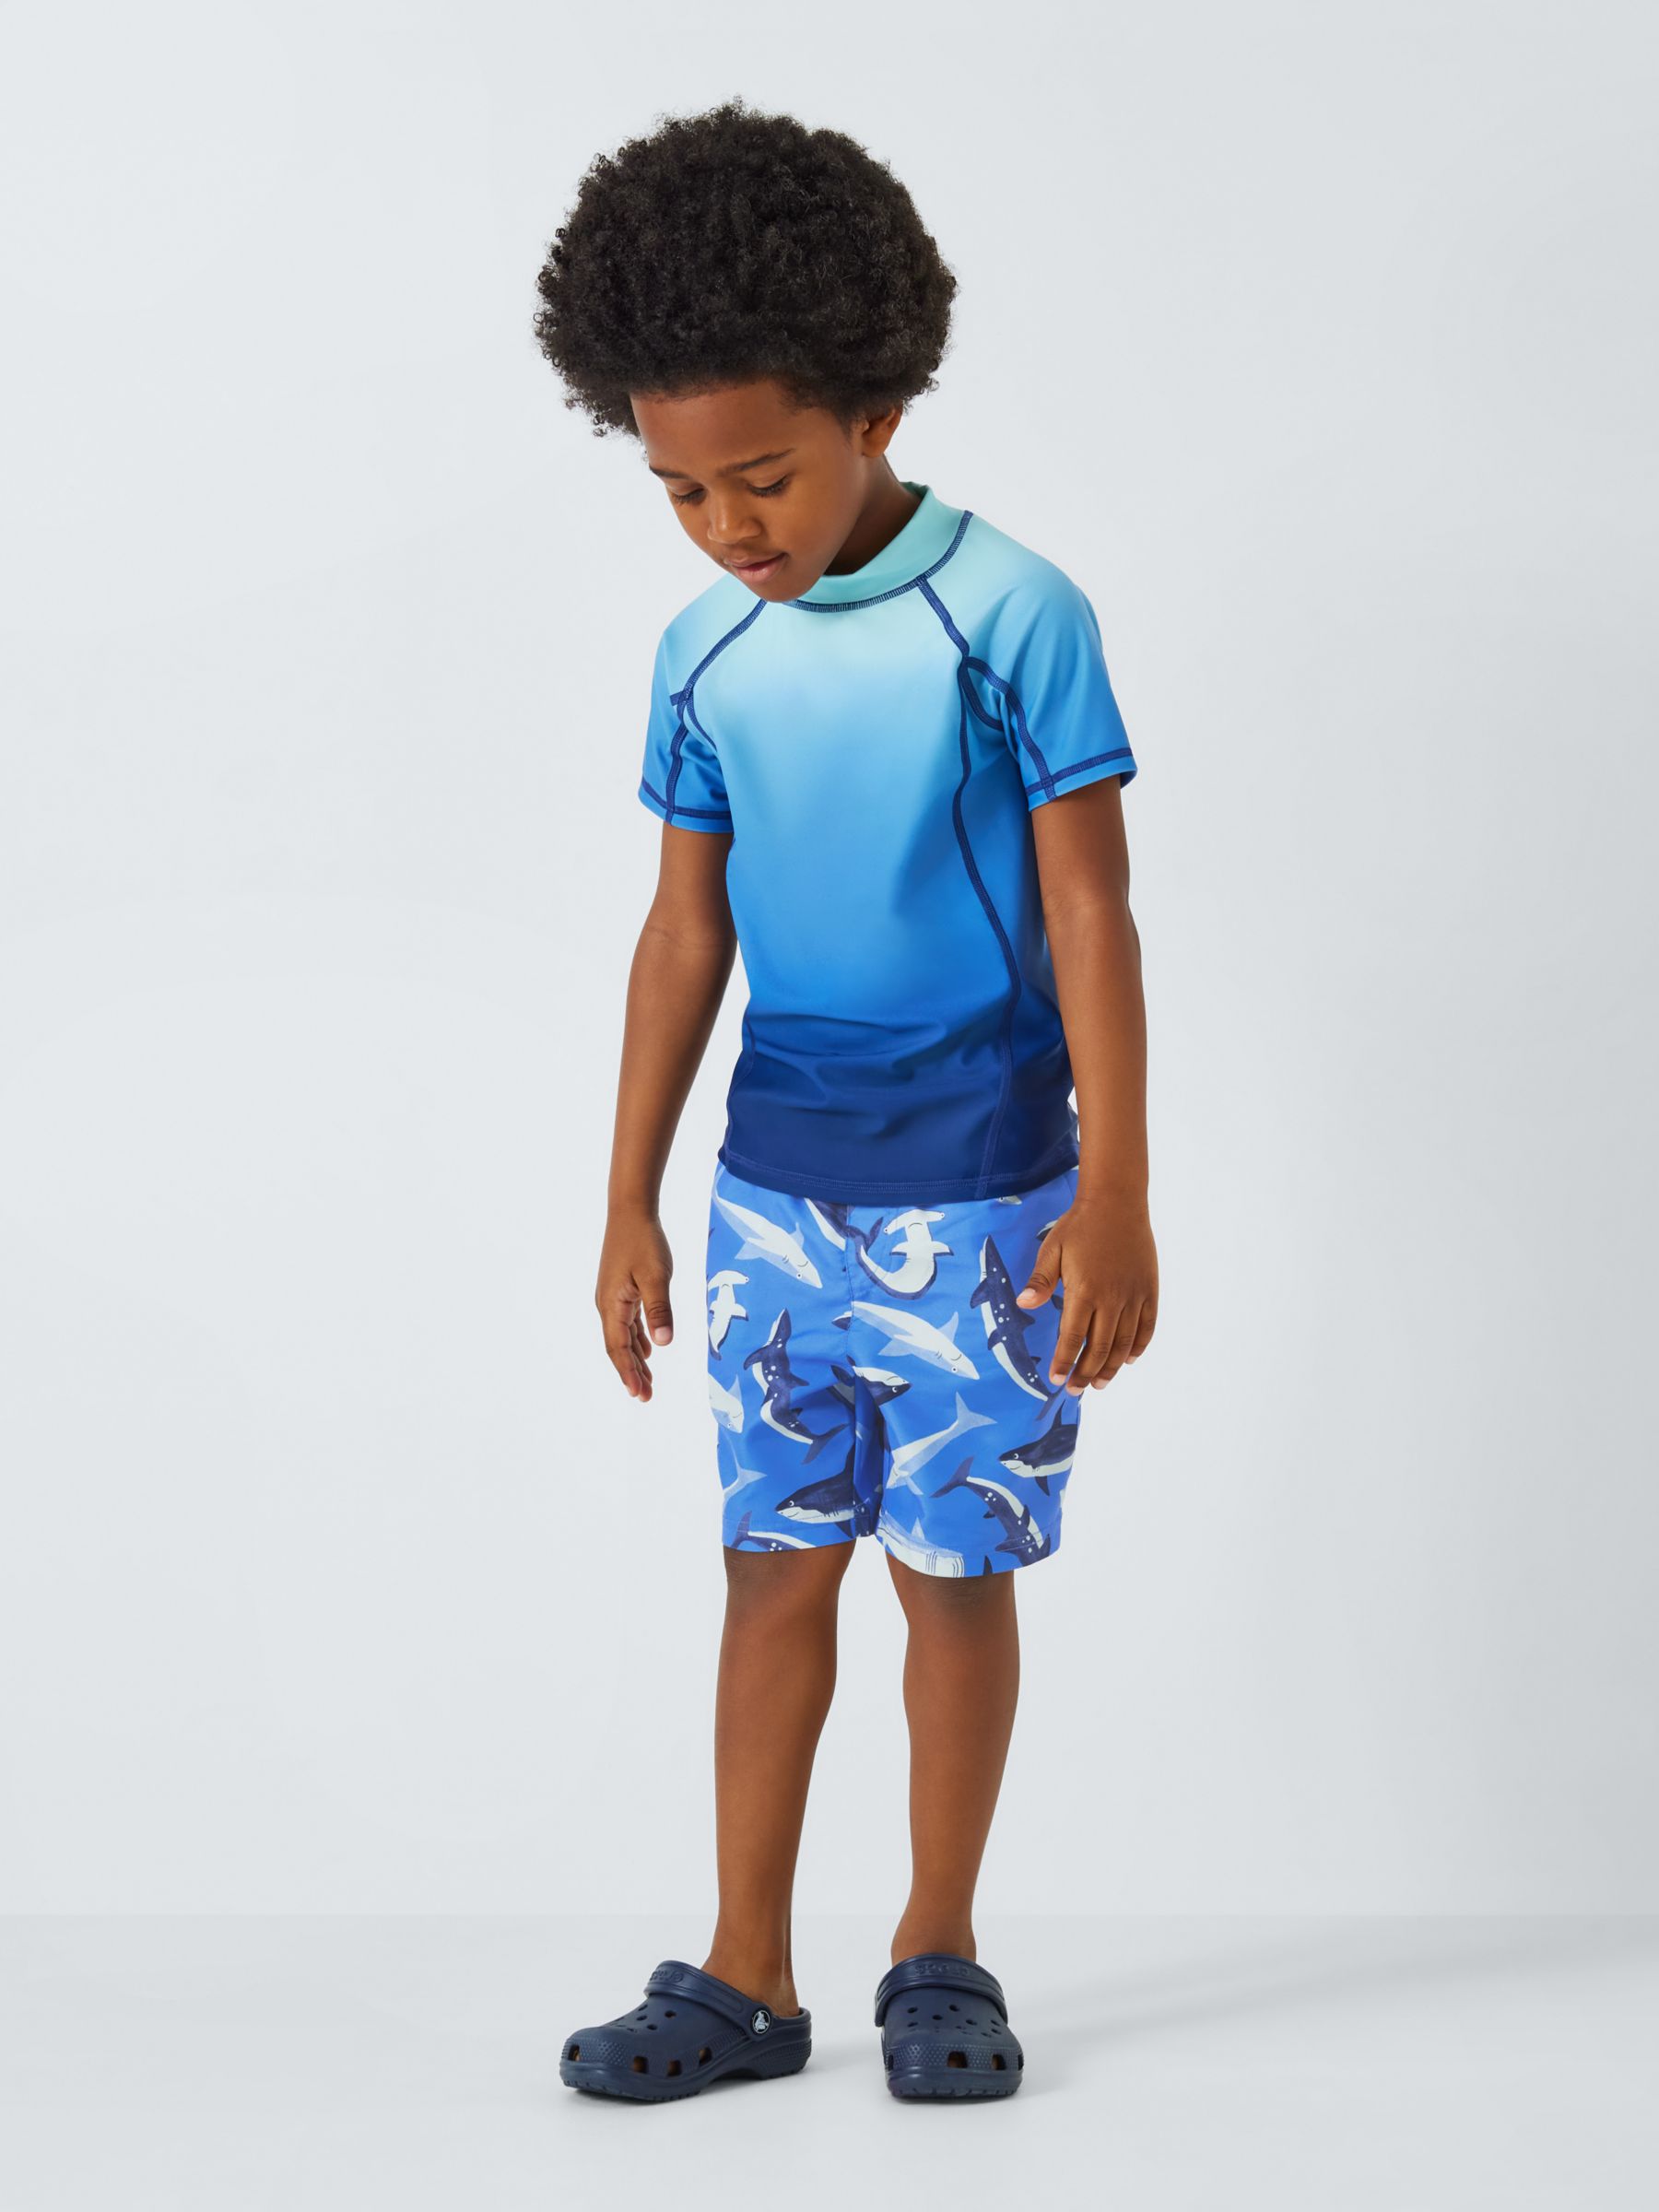 Buy John Lewis Kids' Shark Print Swim Shorts, Blue/Multi Online at johnlewis.com